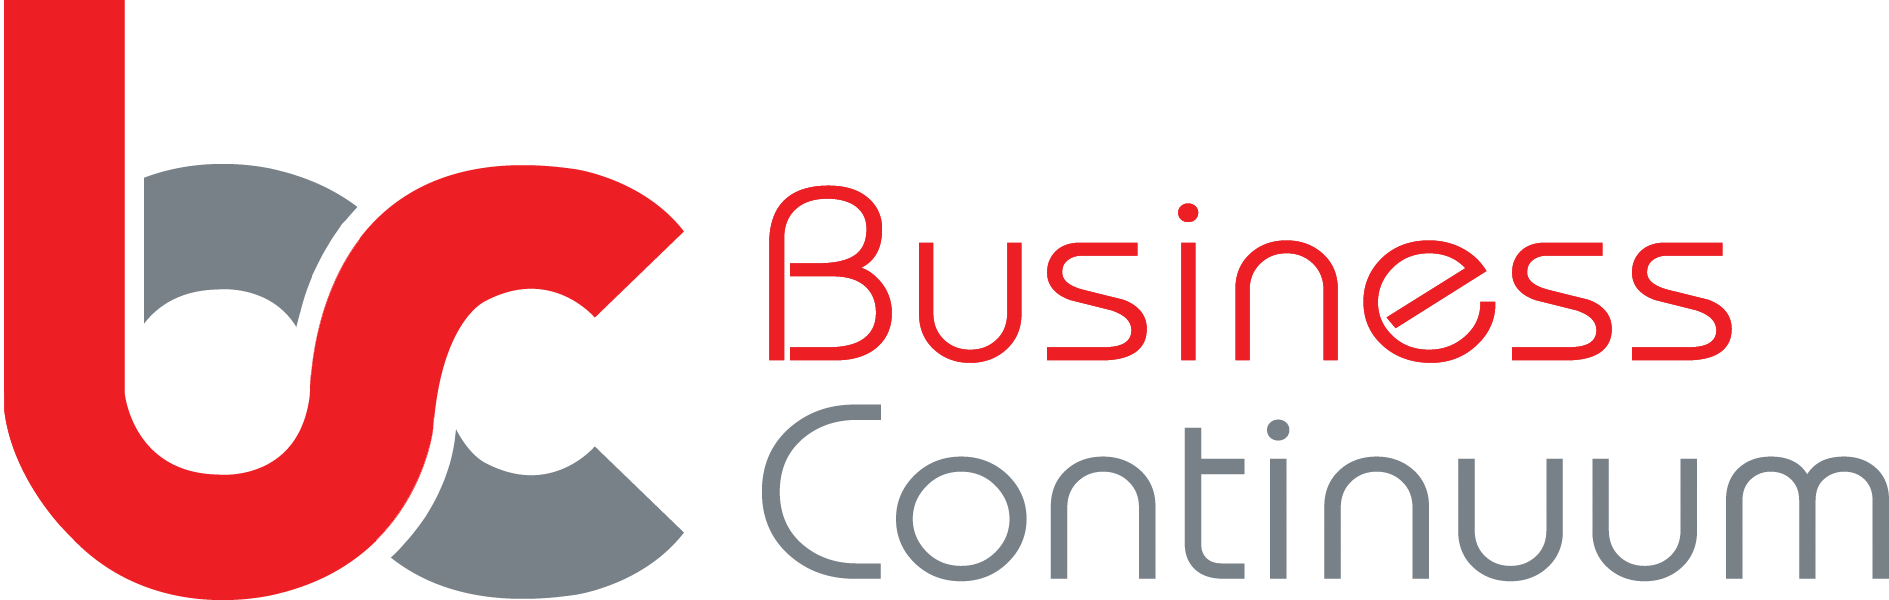 Business Continuum - logo